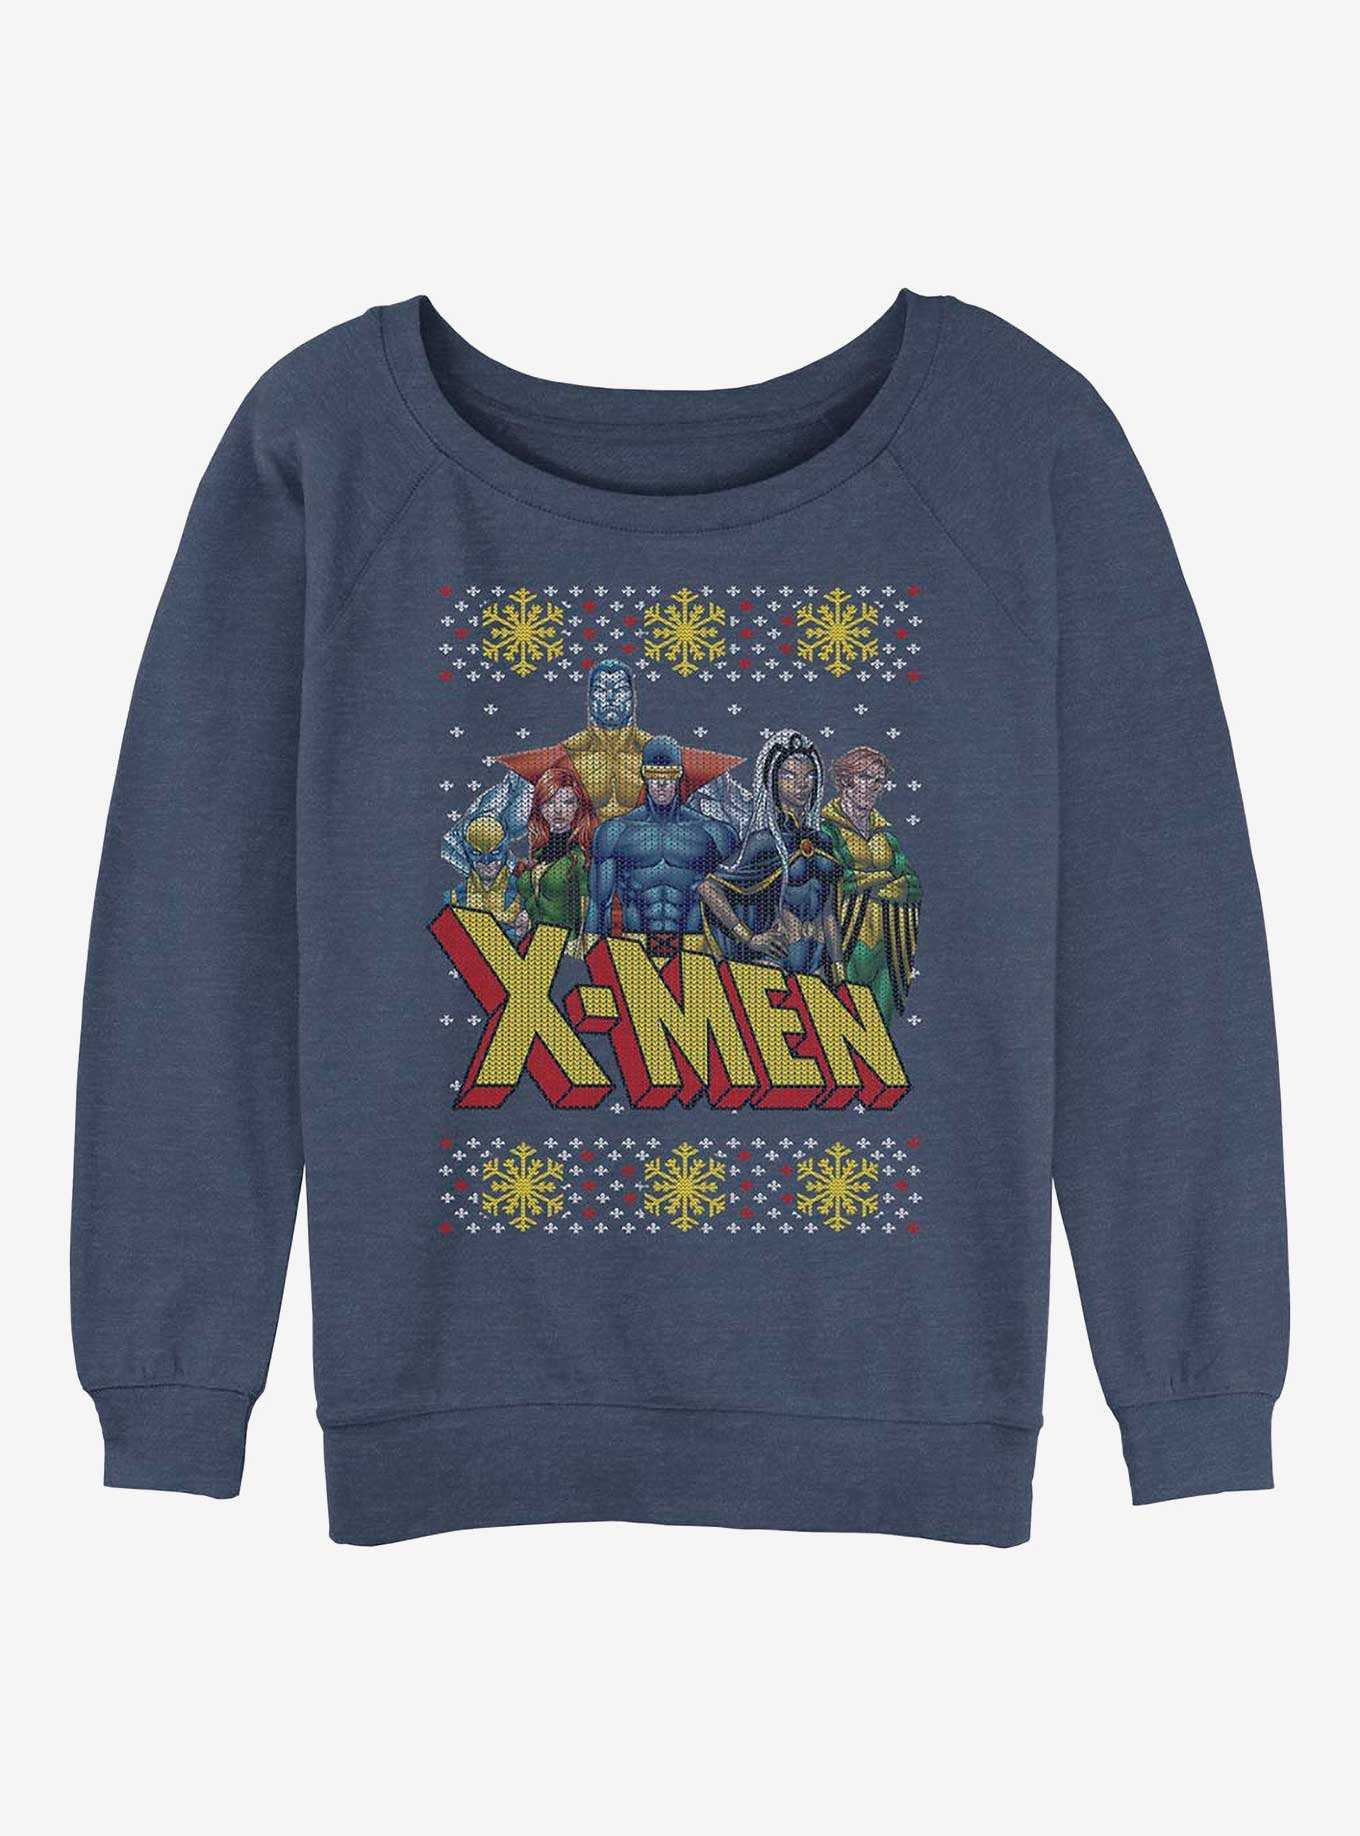 Marvel X-Men Hero Group Girls Slouchy Sweatshirt, , hi-res